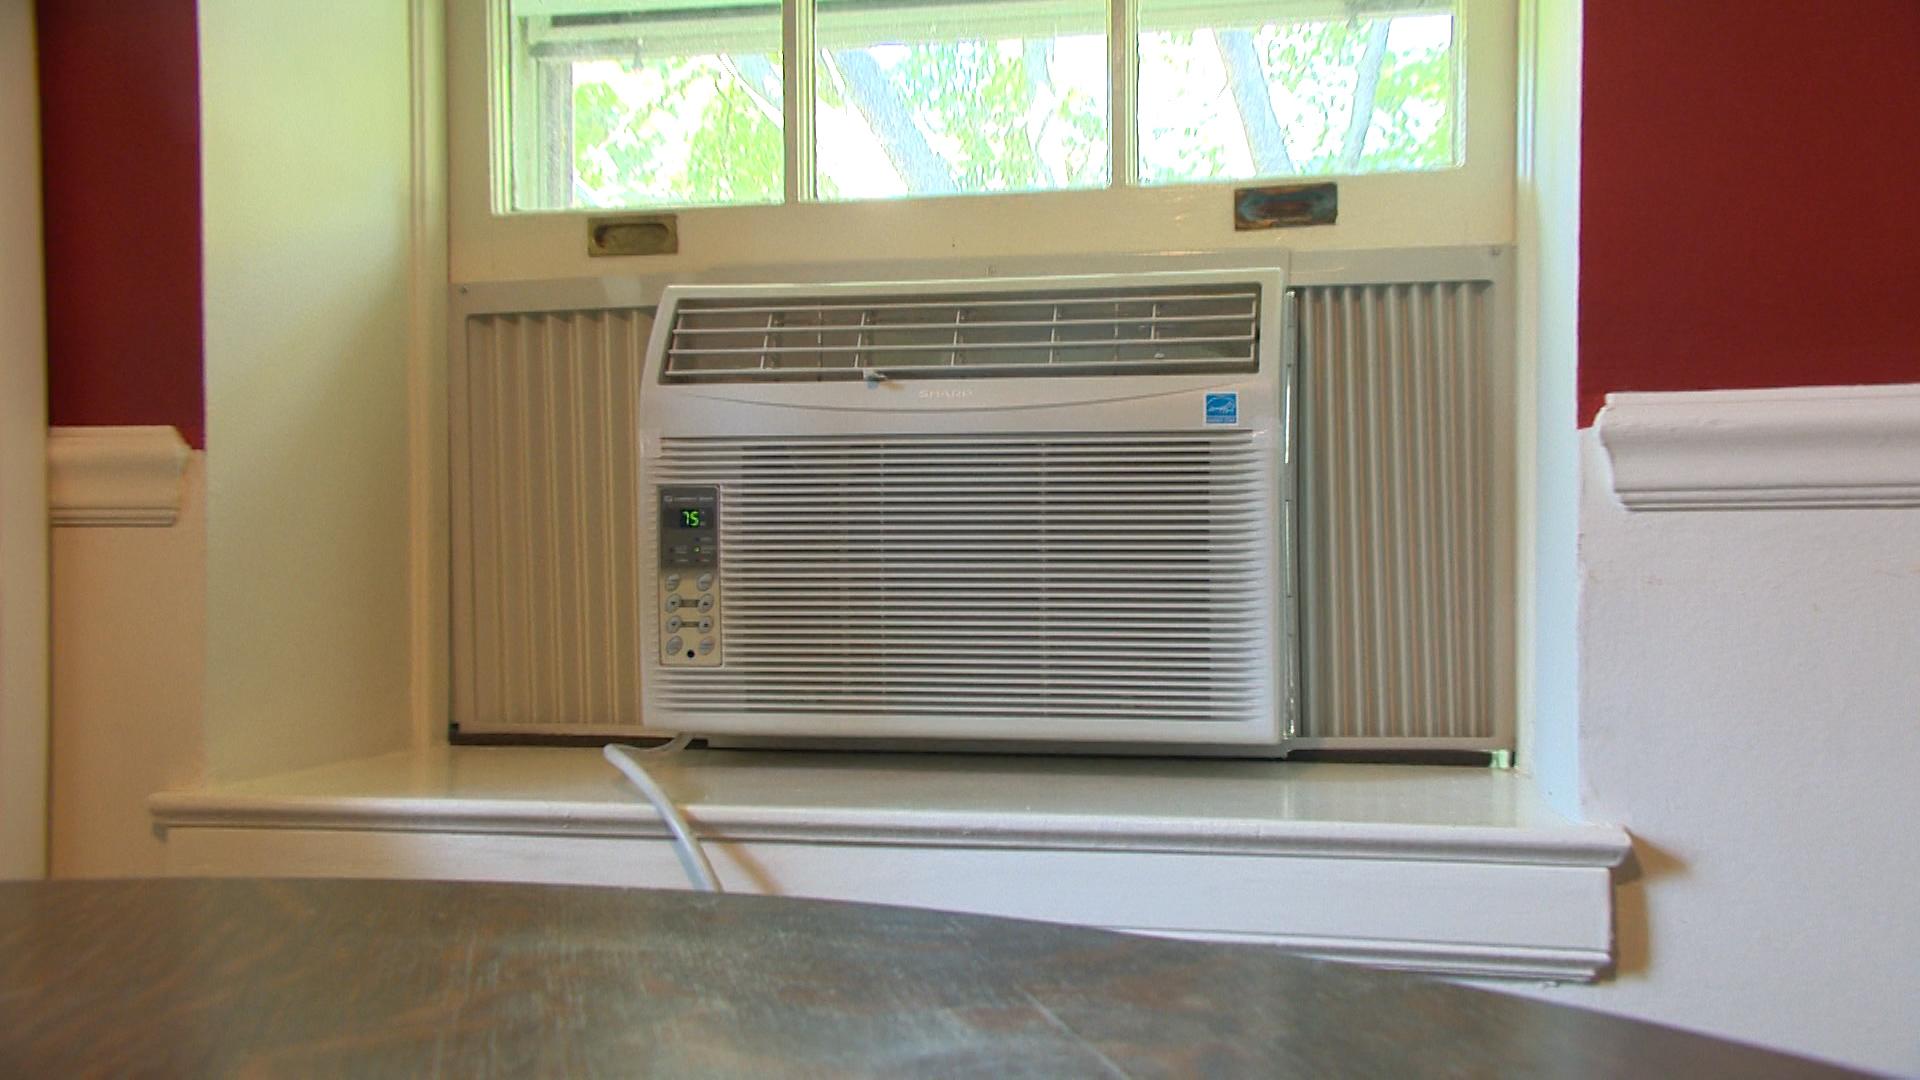 window air conditioner 